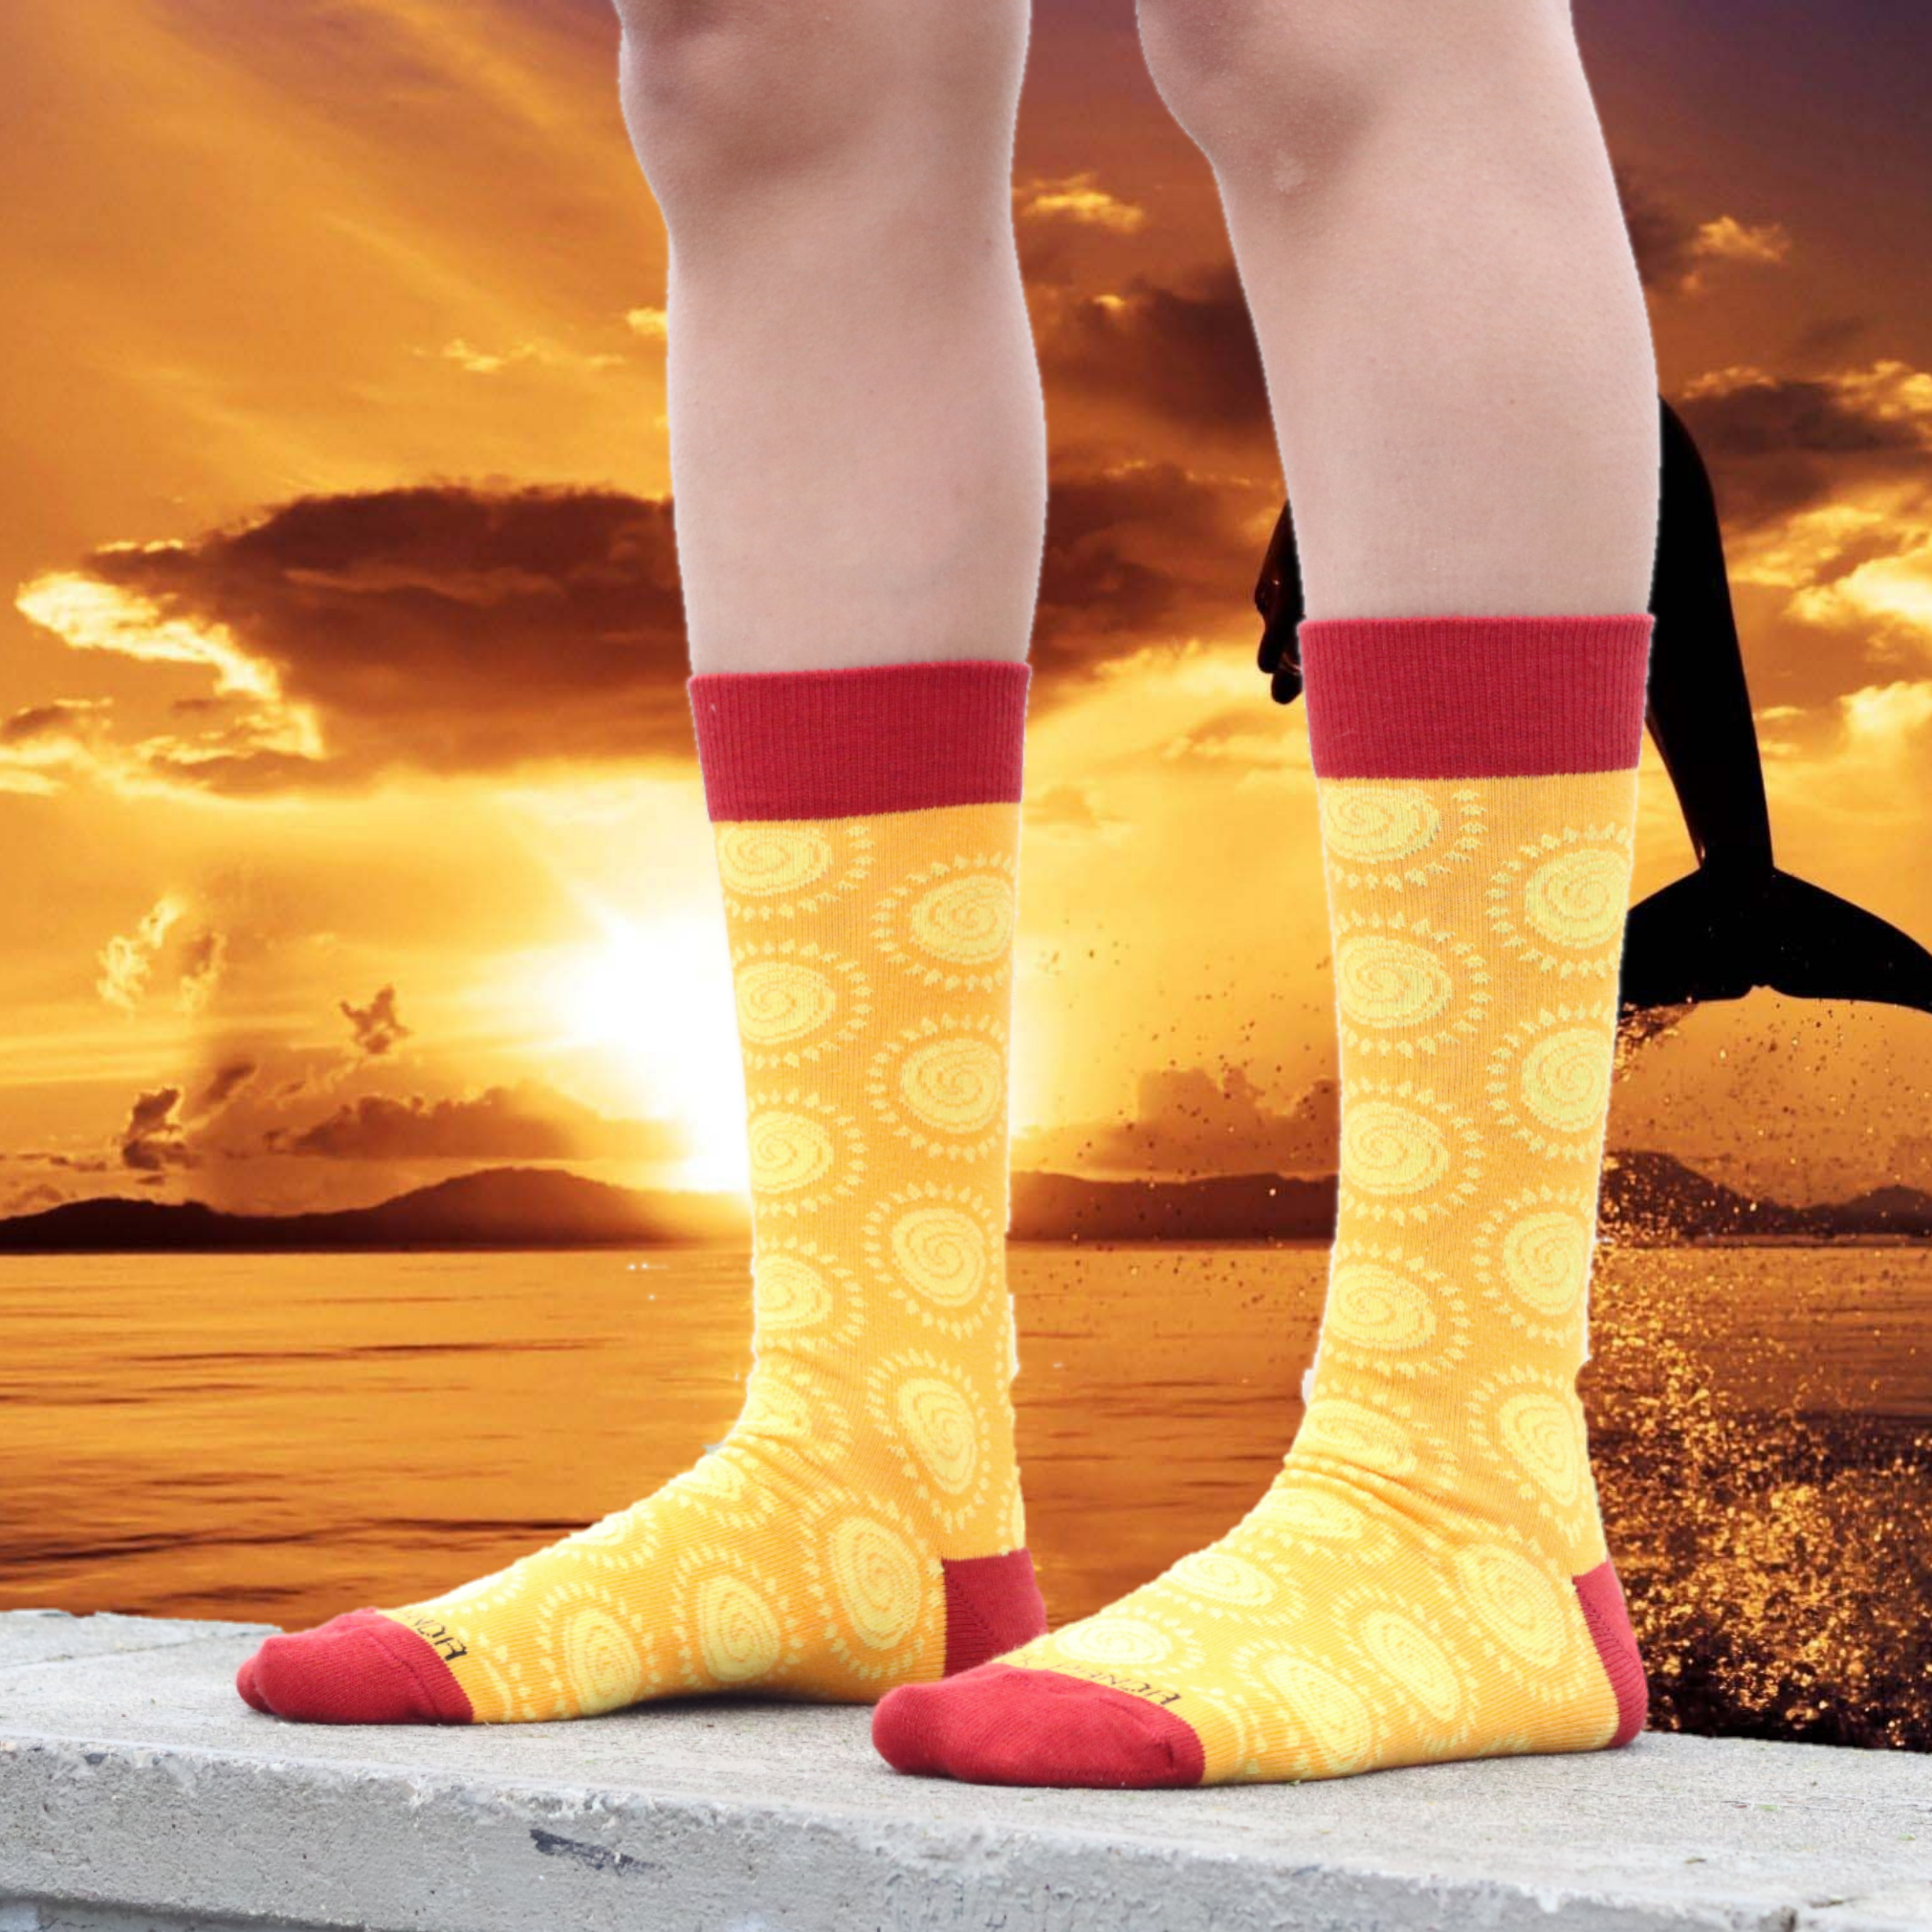 Celestial Sun Pattern Socks from the Sock Panda